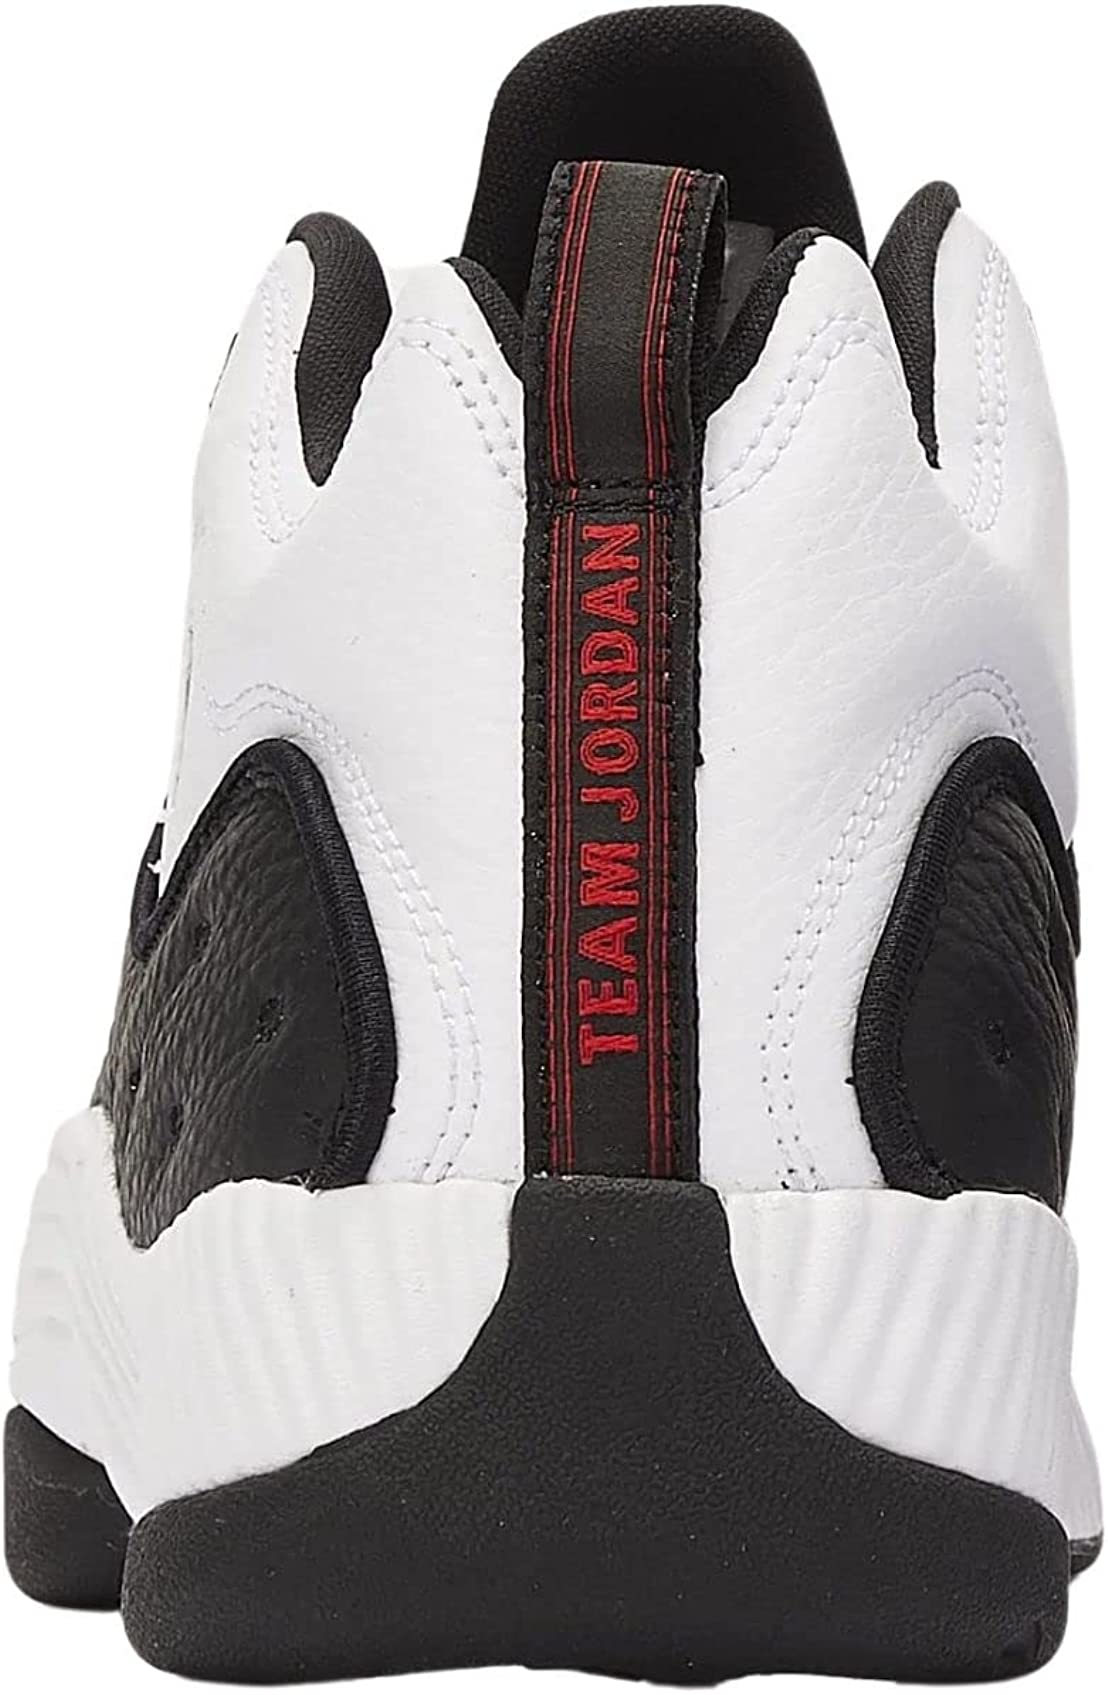 Jordan Mens Jumpman Team II Shoes,White/University Red/Black